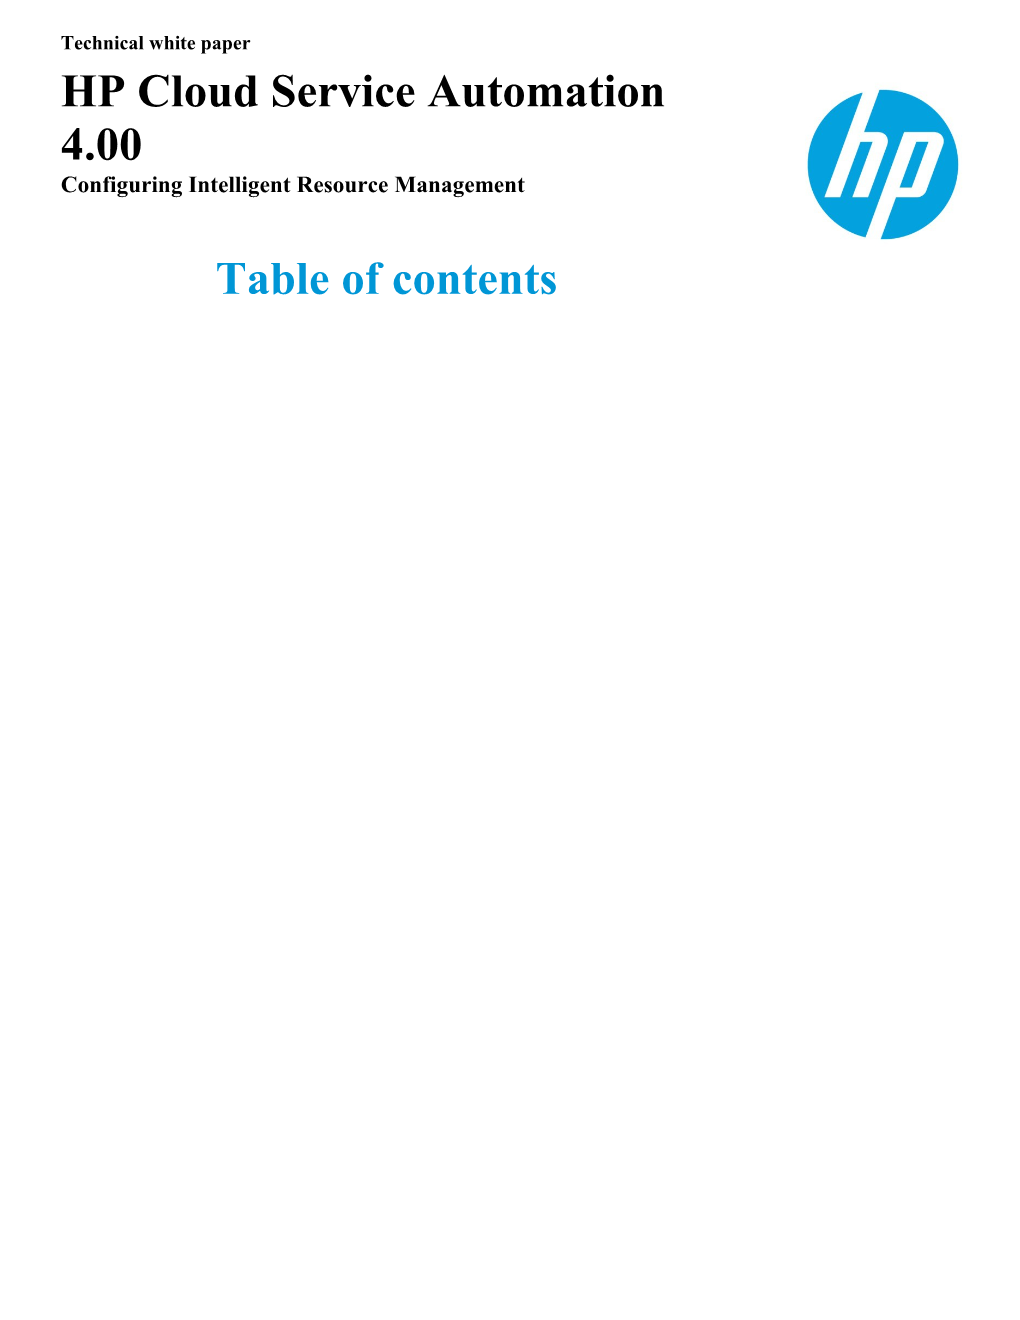 HP CSA 3.20 Configuring Intelligent Resource Management